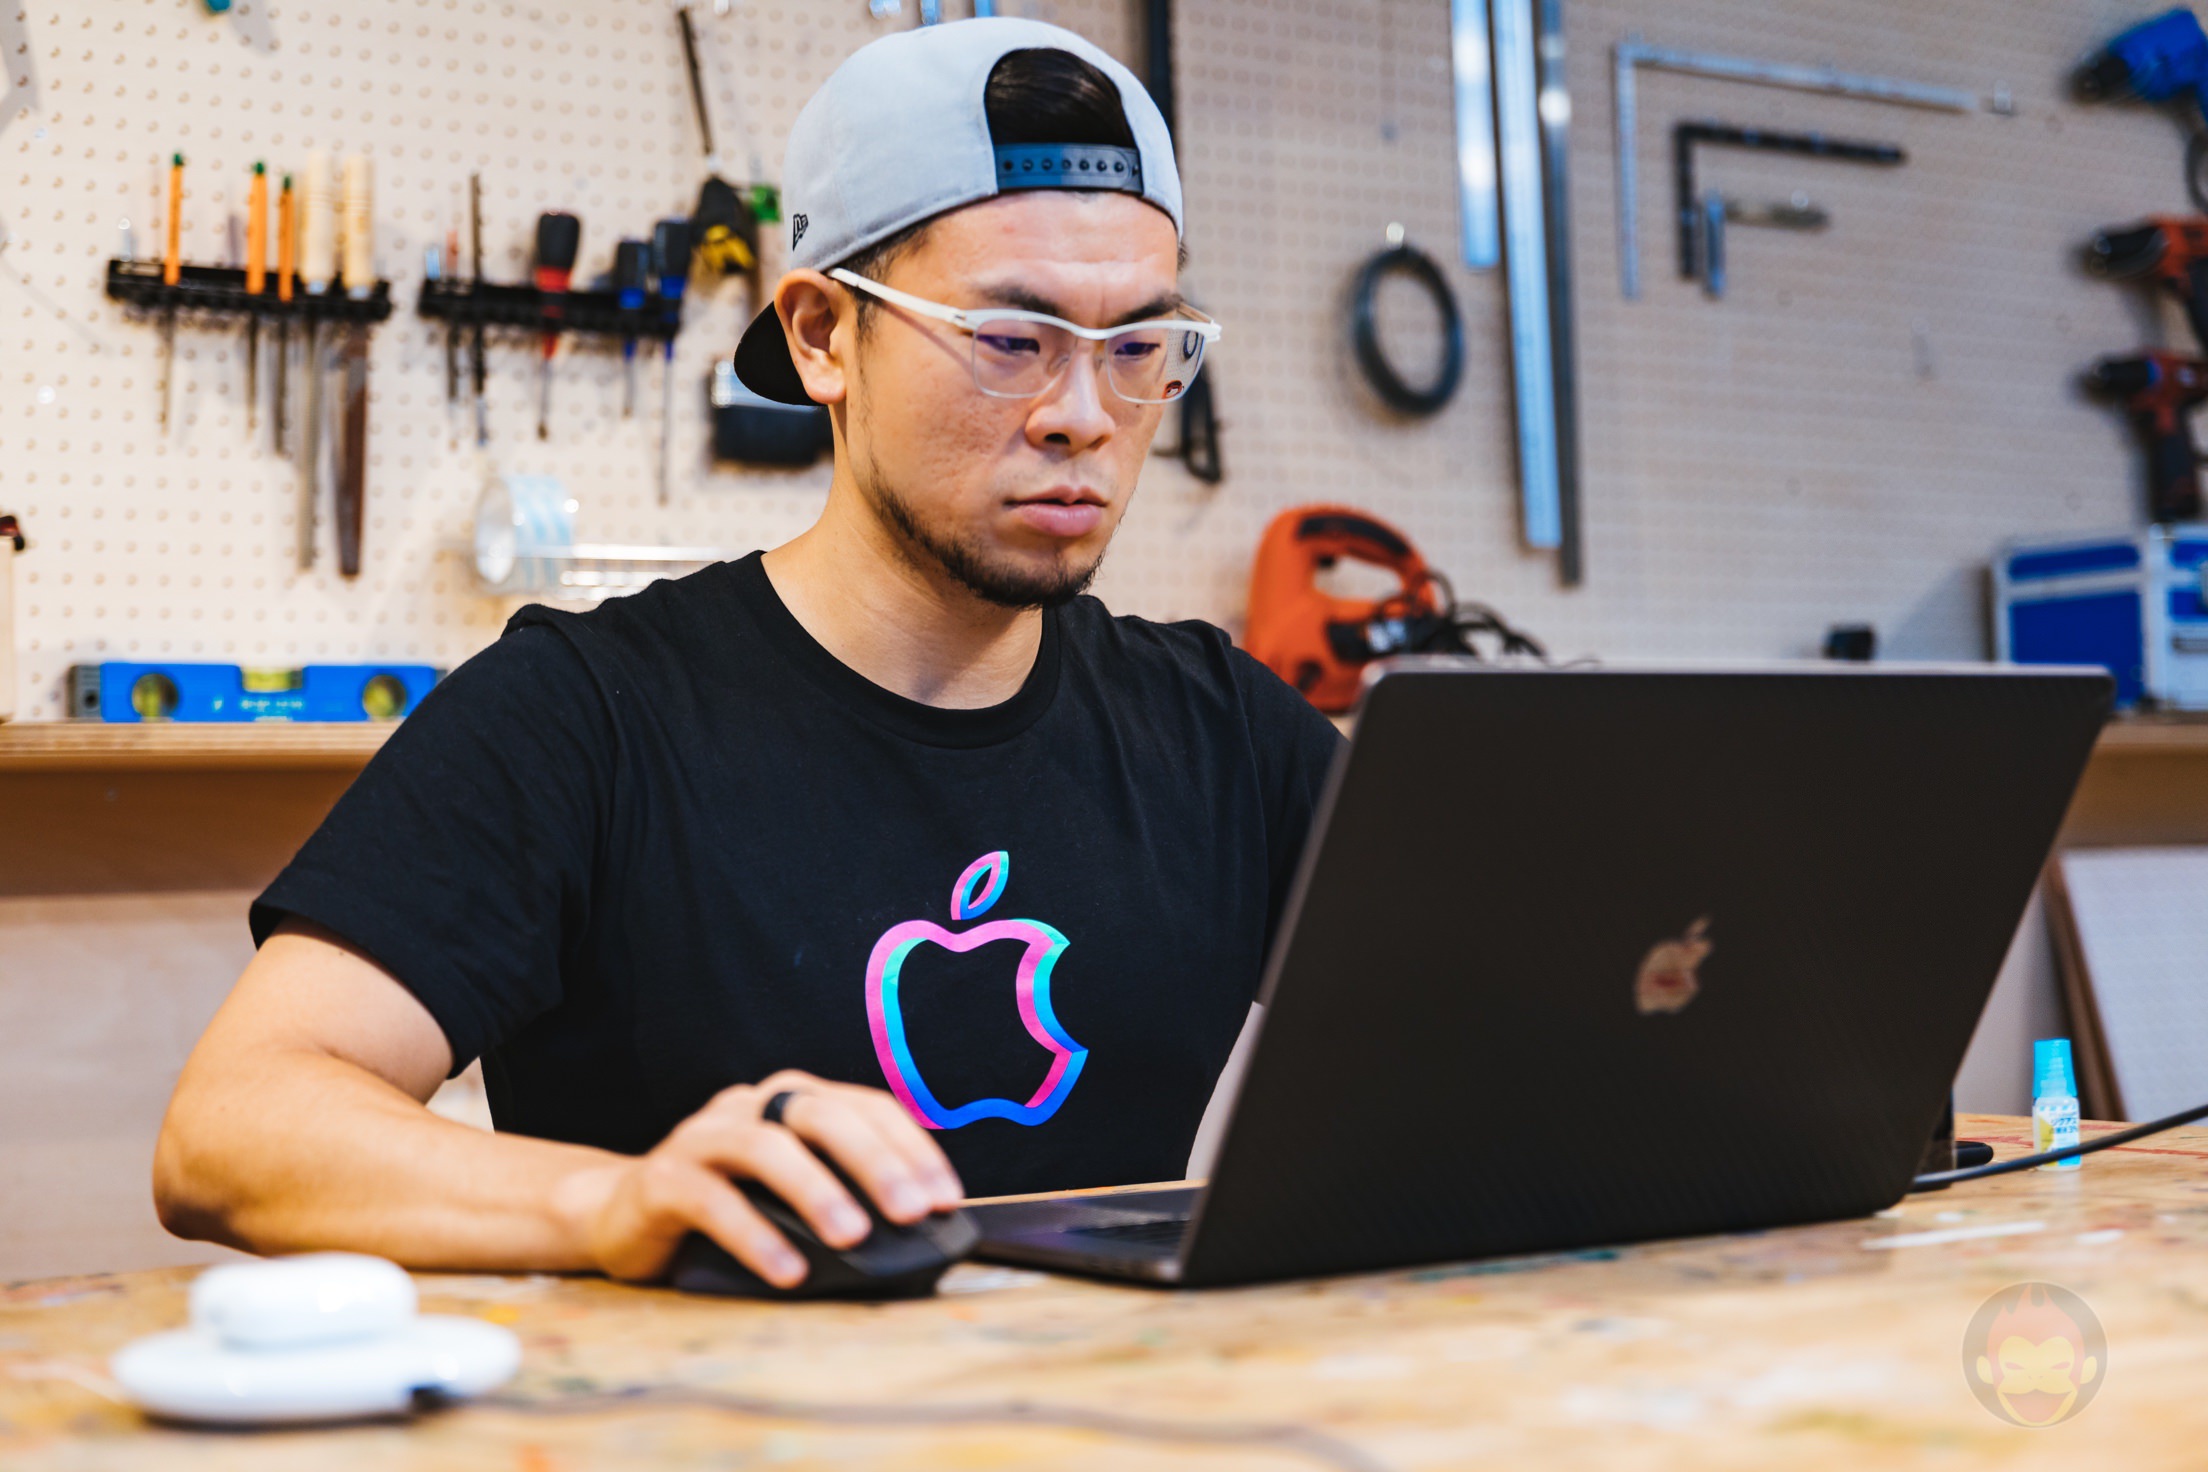 MacBook-Pro-2019-15inch-review-20.jpg